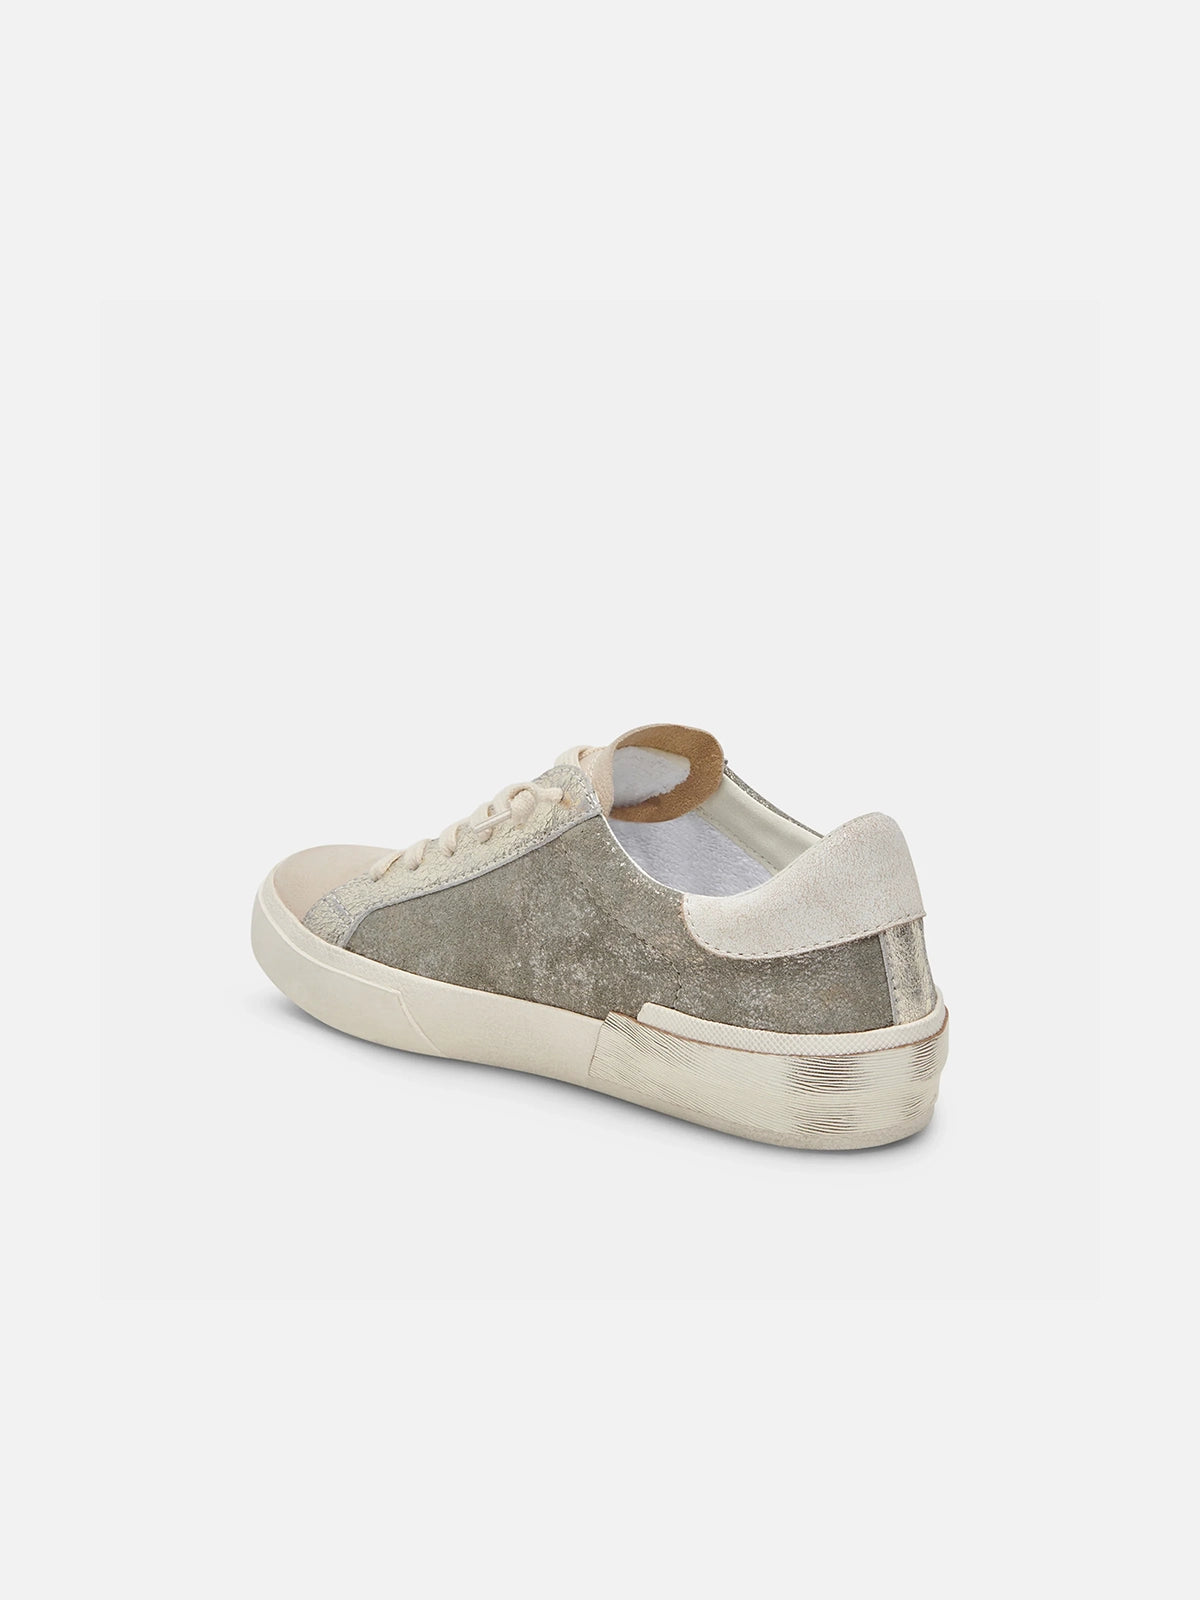 dolce vita zina sneakers in granite metallic suede